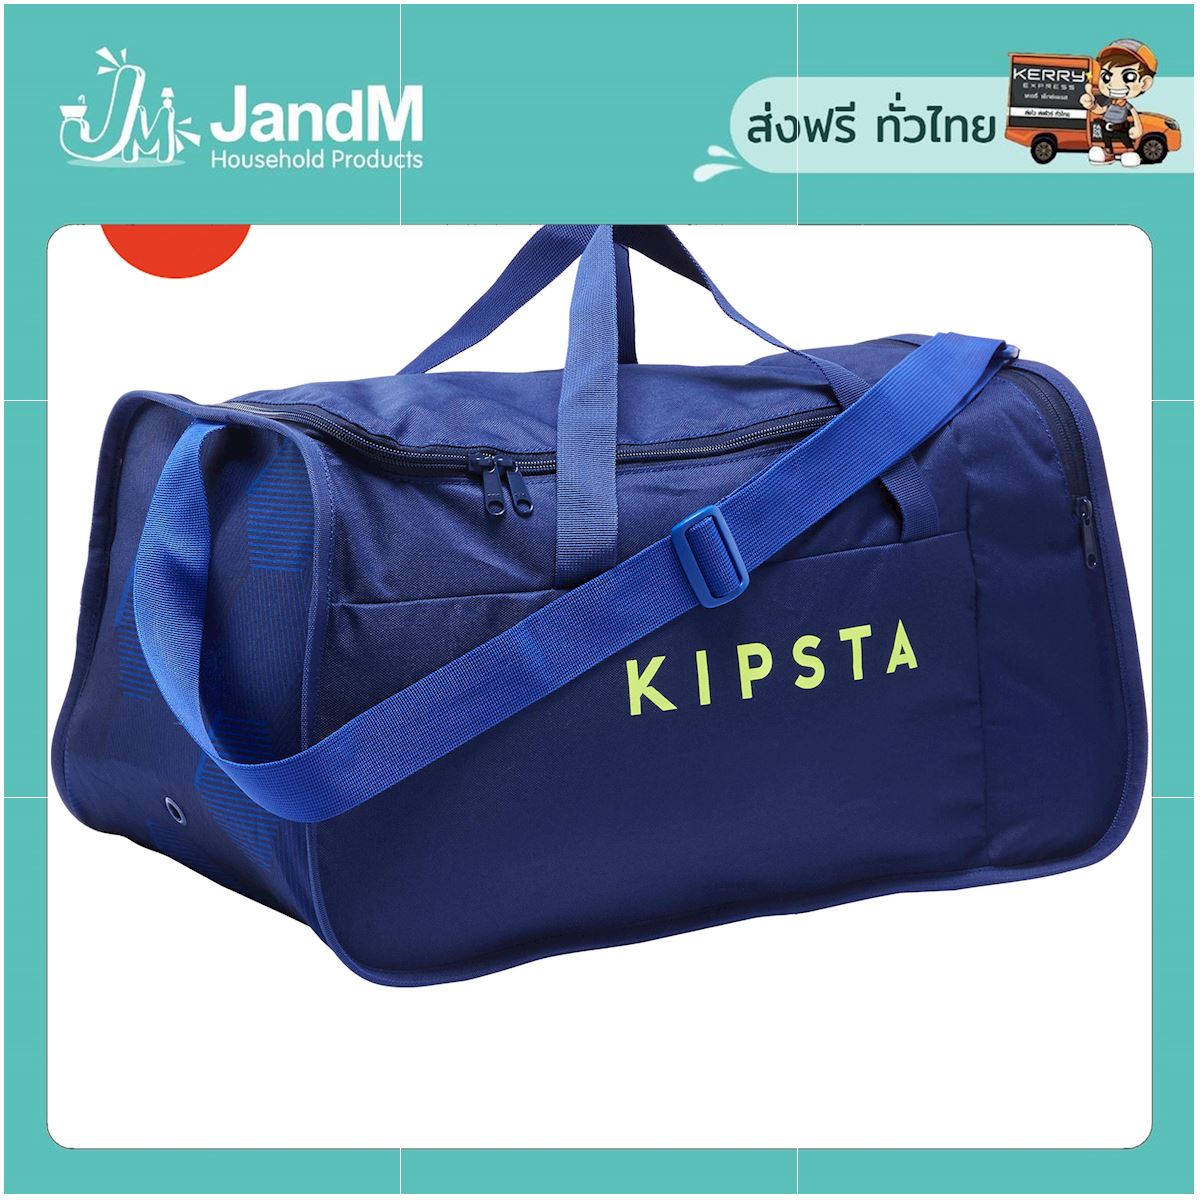 JandM กระเป๋าสำหรับกีฬาประเภททีมขนาด 40 ลิตรรุ่น Kipocket (สีน้ำเงิน) ส่งkerry มีเก็บเงินปลายทาง